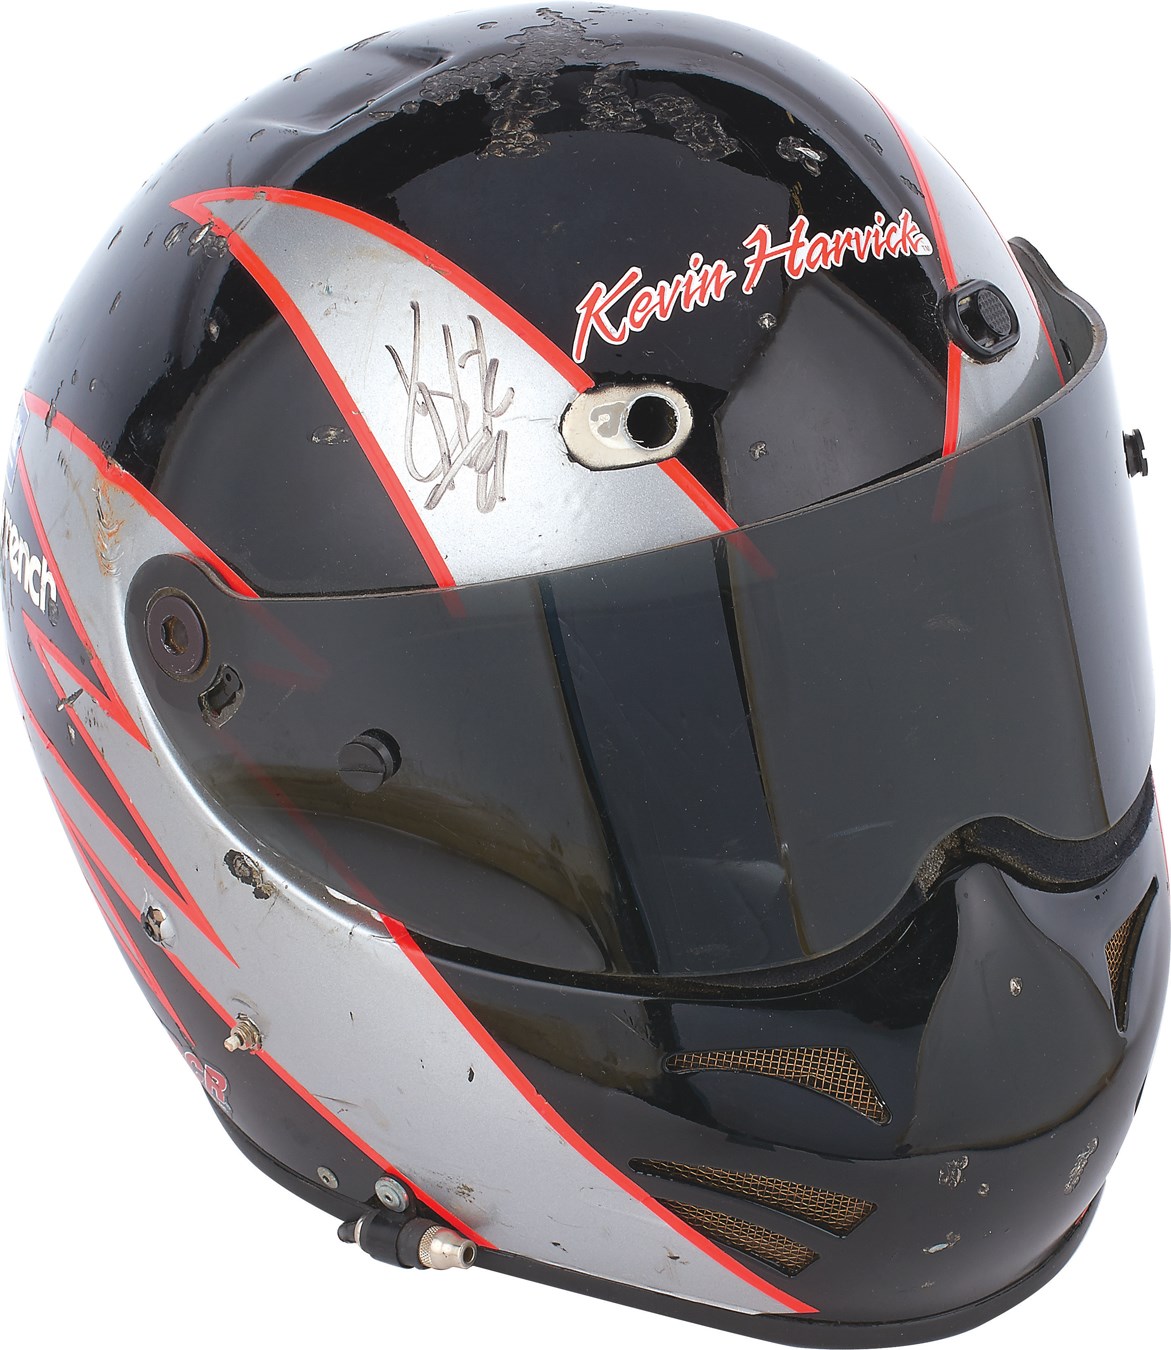 - Kevin Harvick Race Worn Helmet